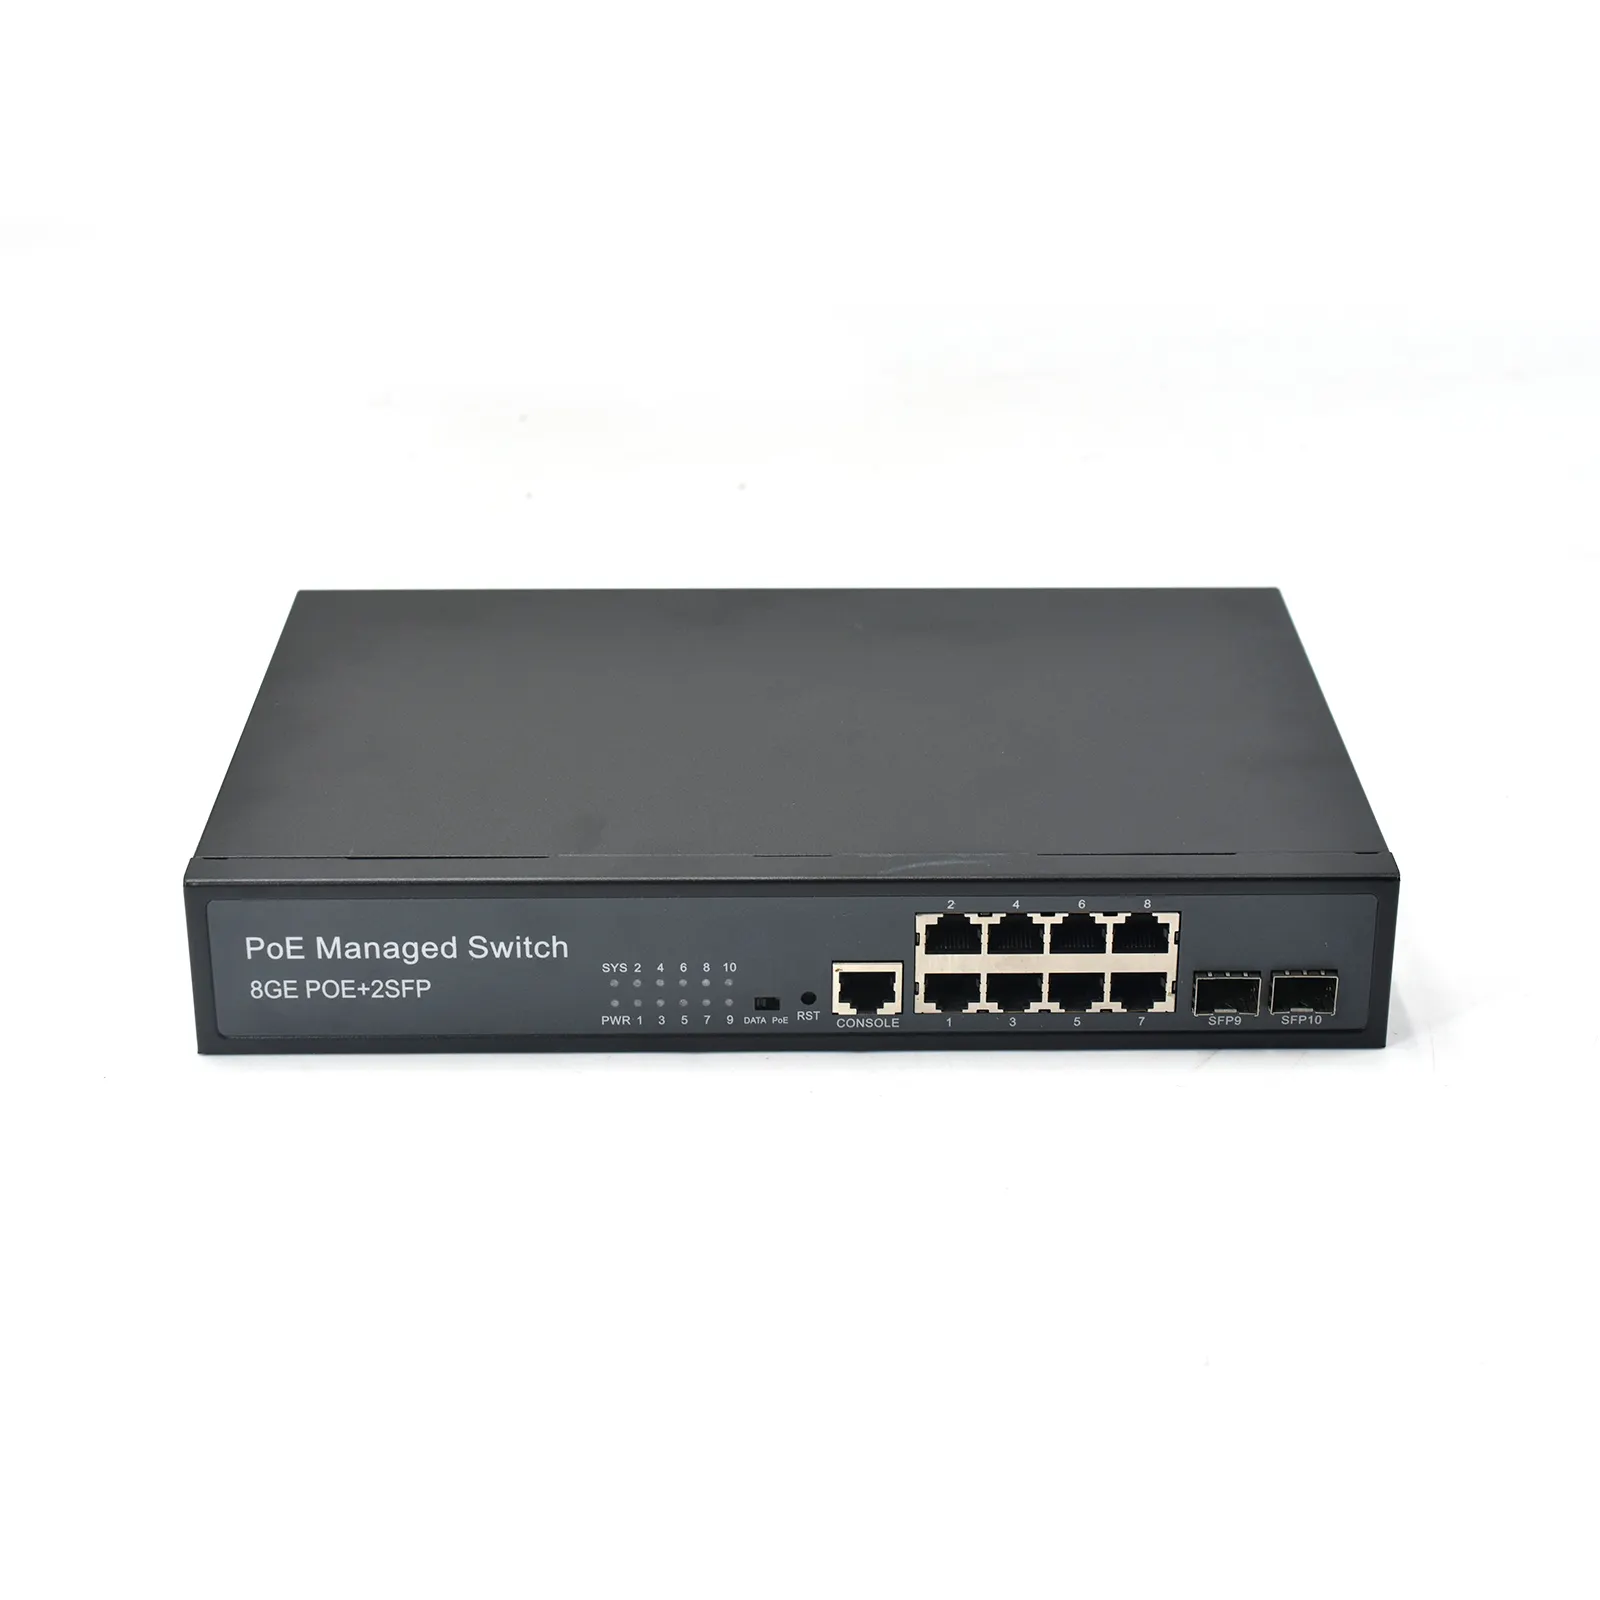 Wanglink L2 8-Port Gigabit Ethernet Web Managed POE+ Switch, 802.3af/at Compliant120W Built-in Power